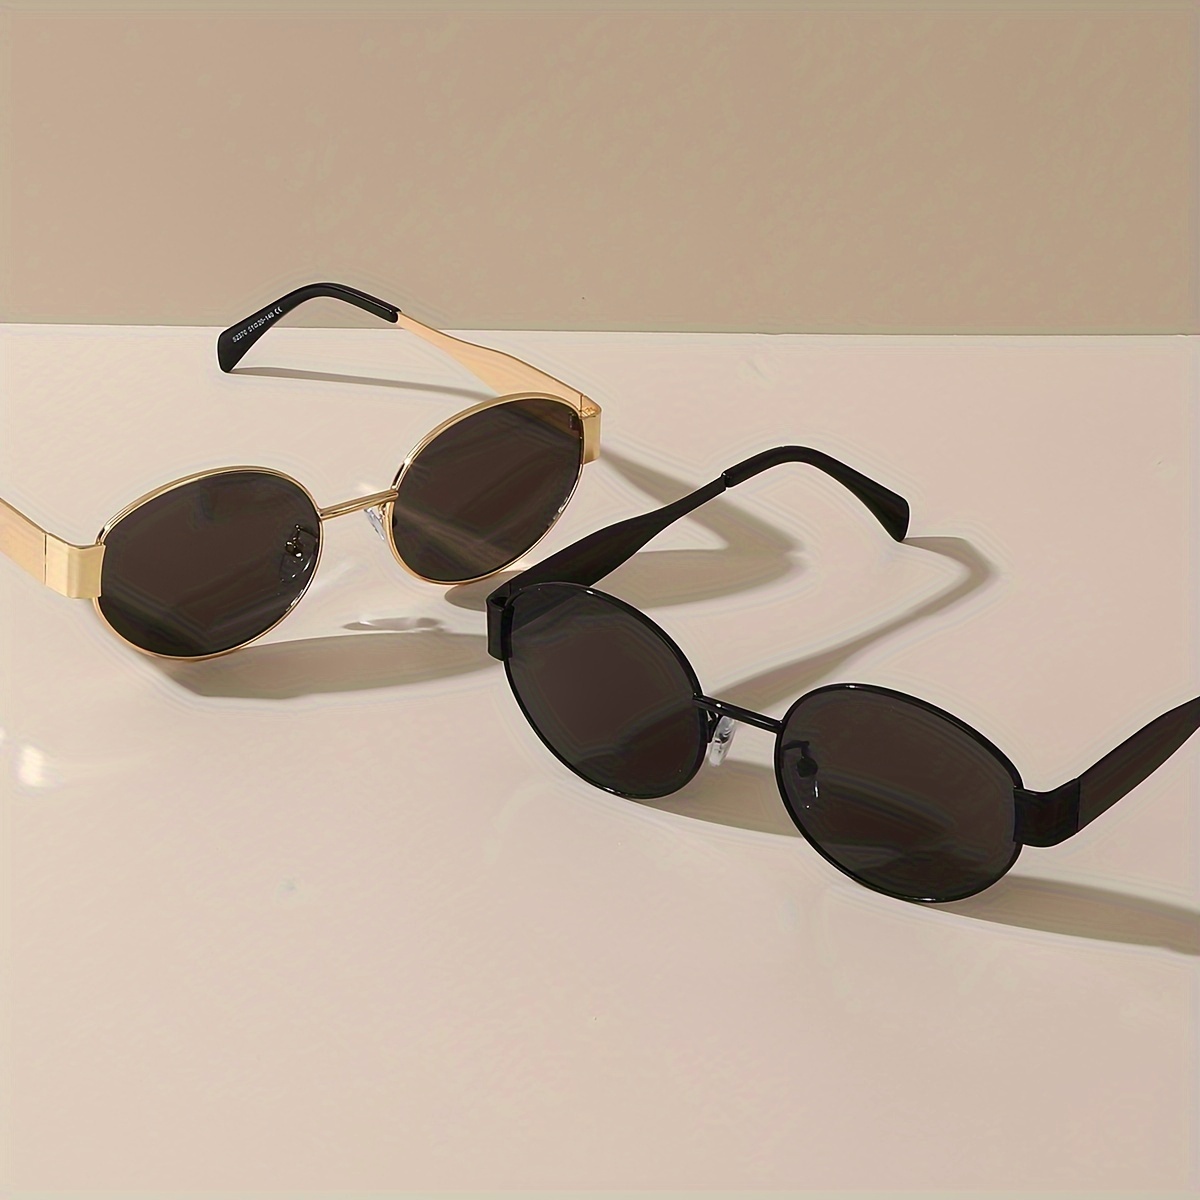 

2pcs Retro Oval Fashion Glasses Men And Women Fashion Glasses Classic Shade For Driving Travel